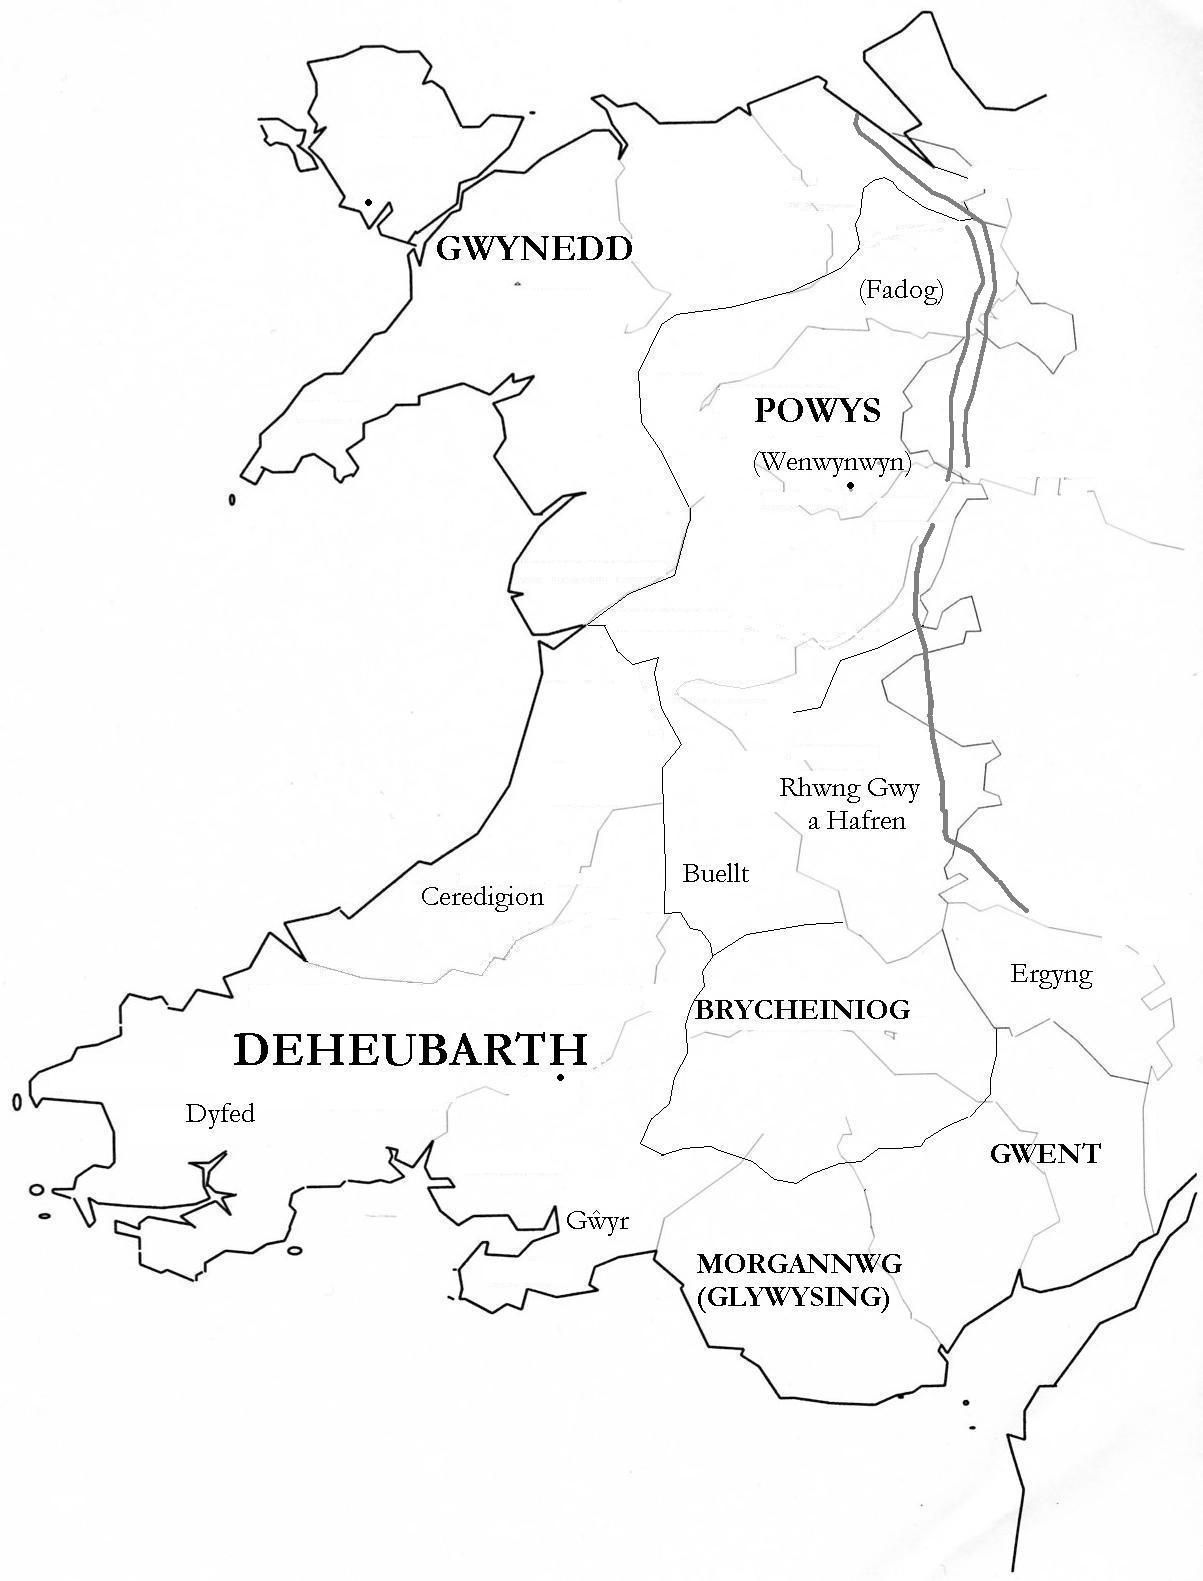 Kingdom of Ceredigion